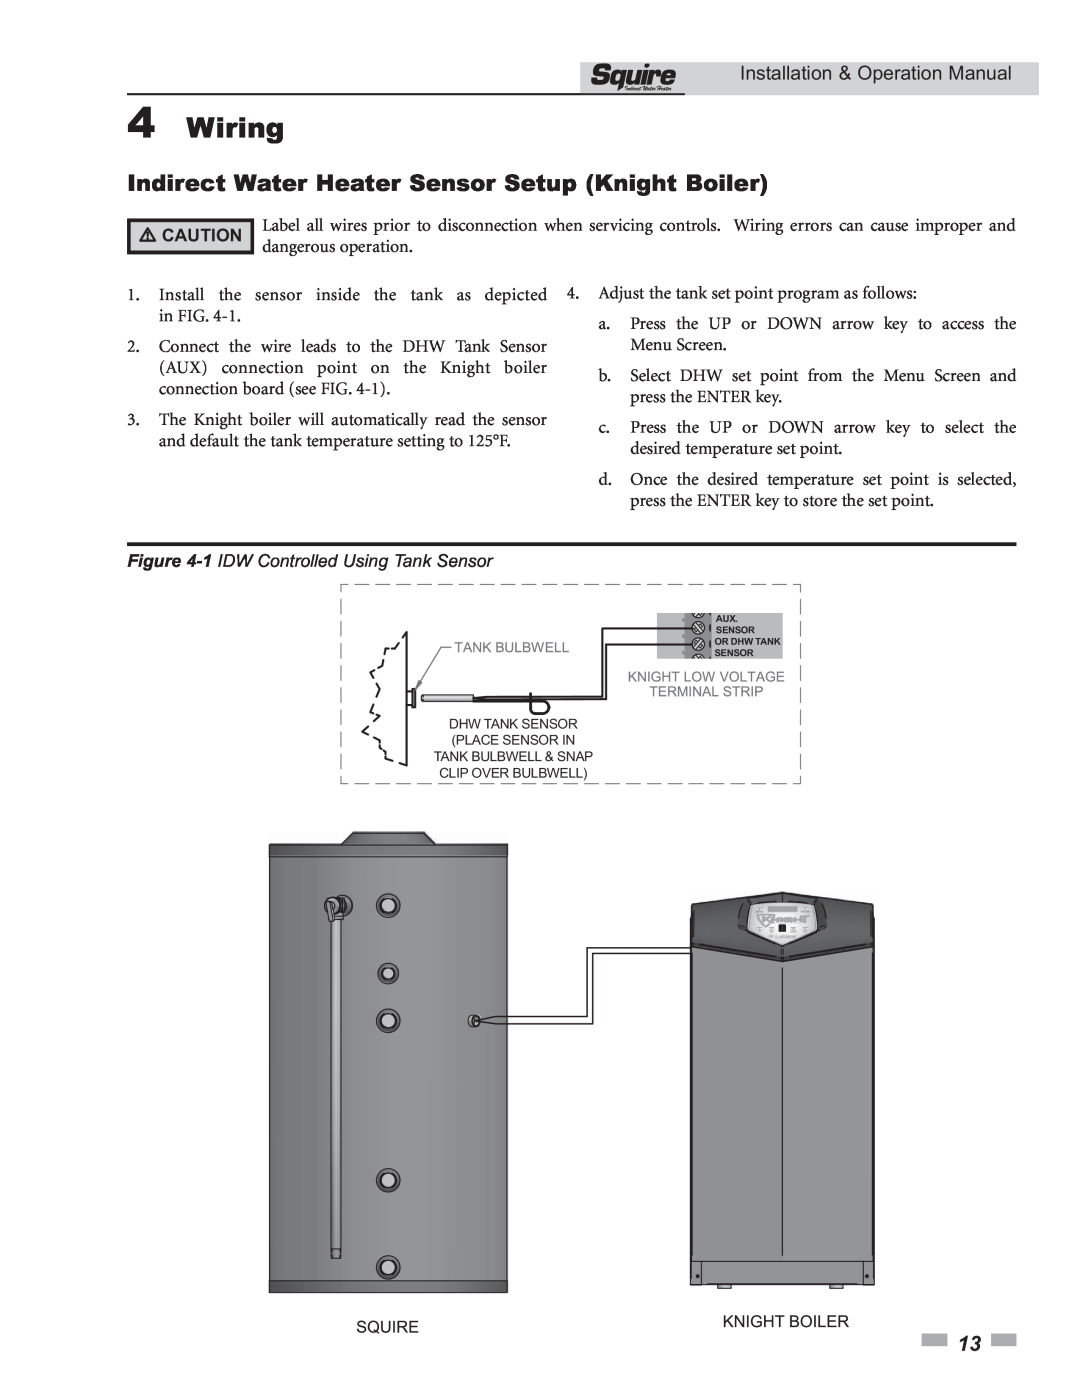 Lochinvar SSS031, SSS081 4Wiring, Indirect Water Heater Sensor Setup Knight Boiler, 1 IDW Controlled Using Tank Sensor 